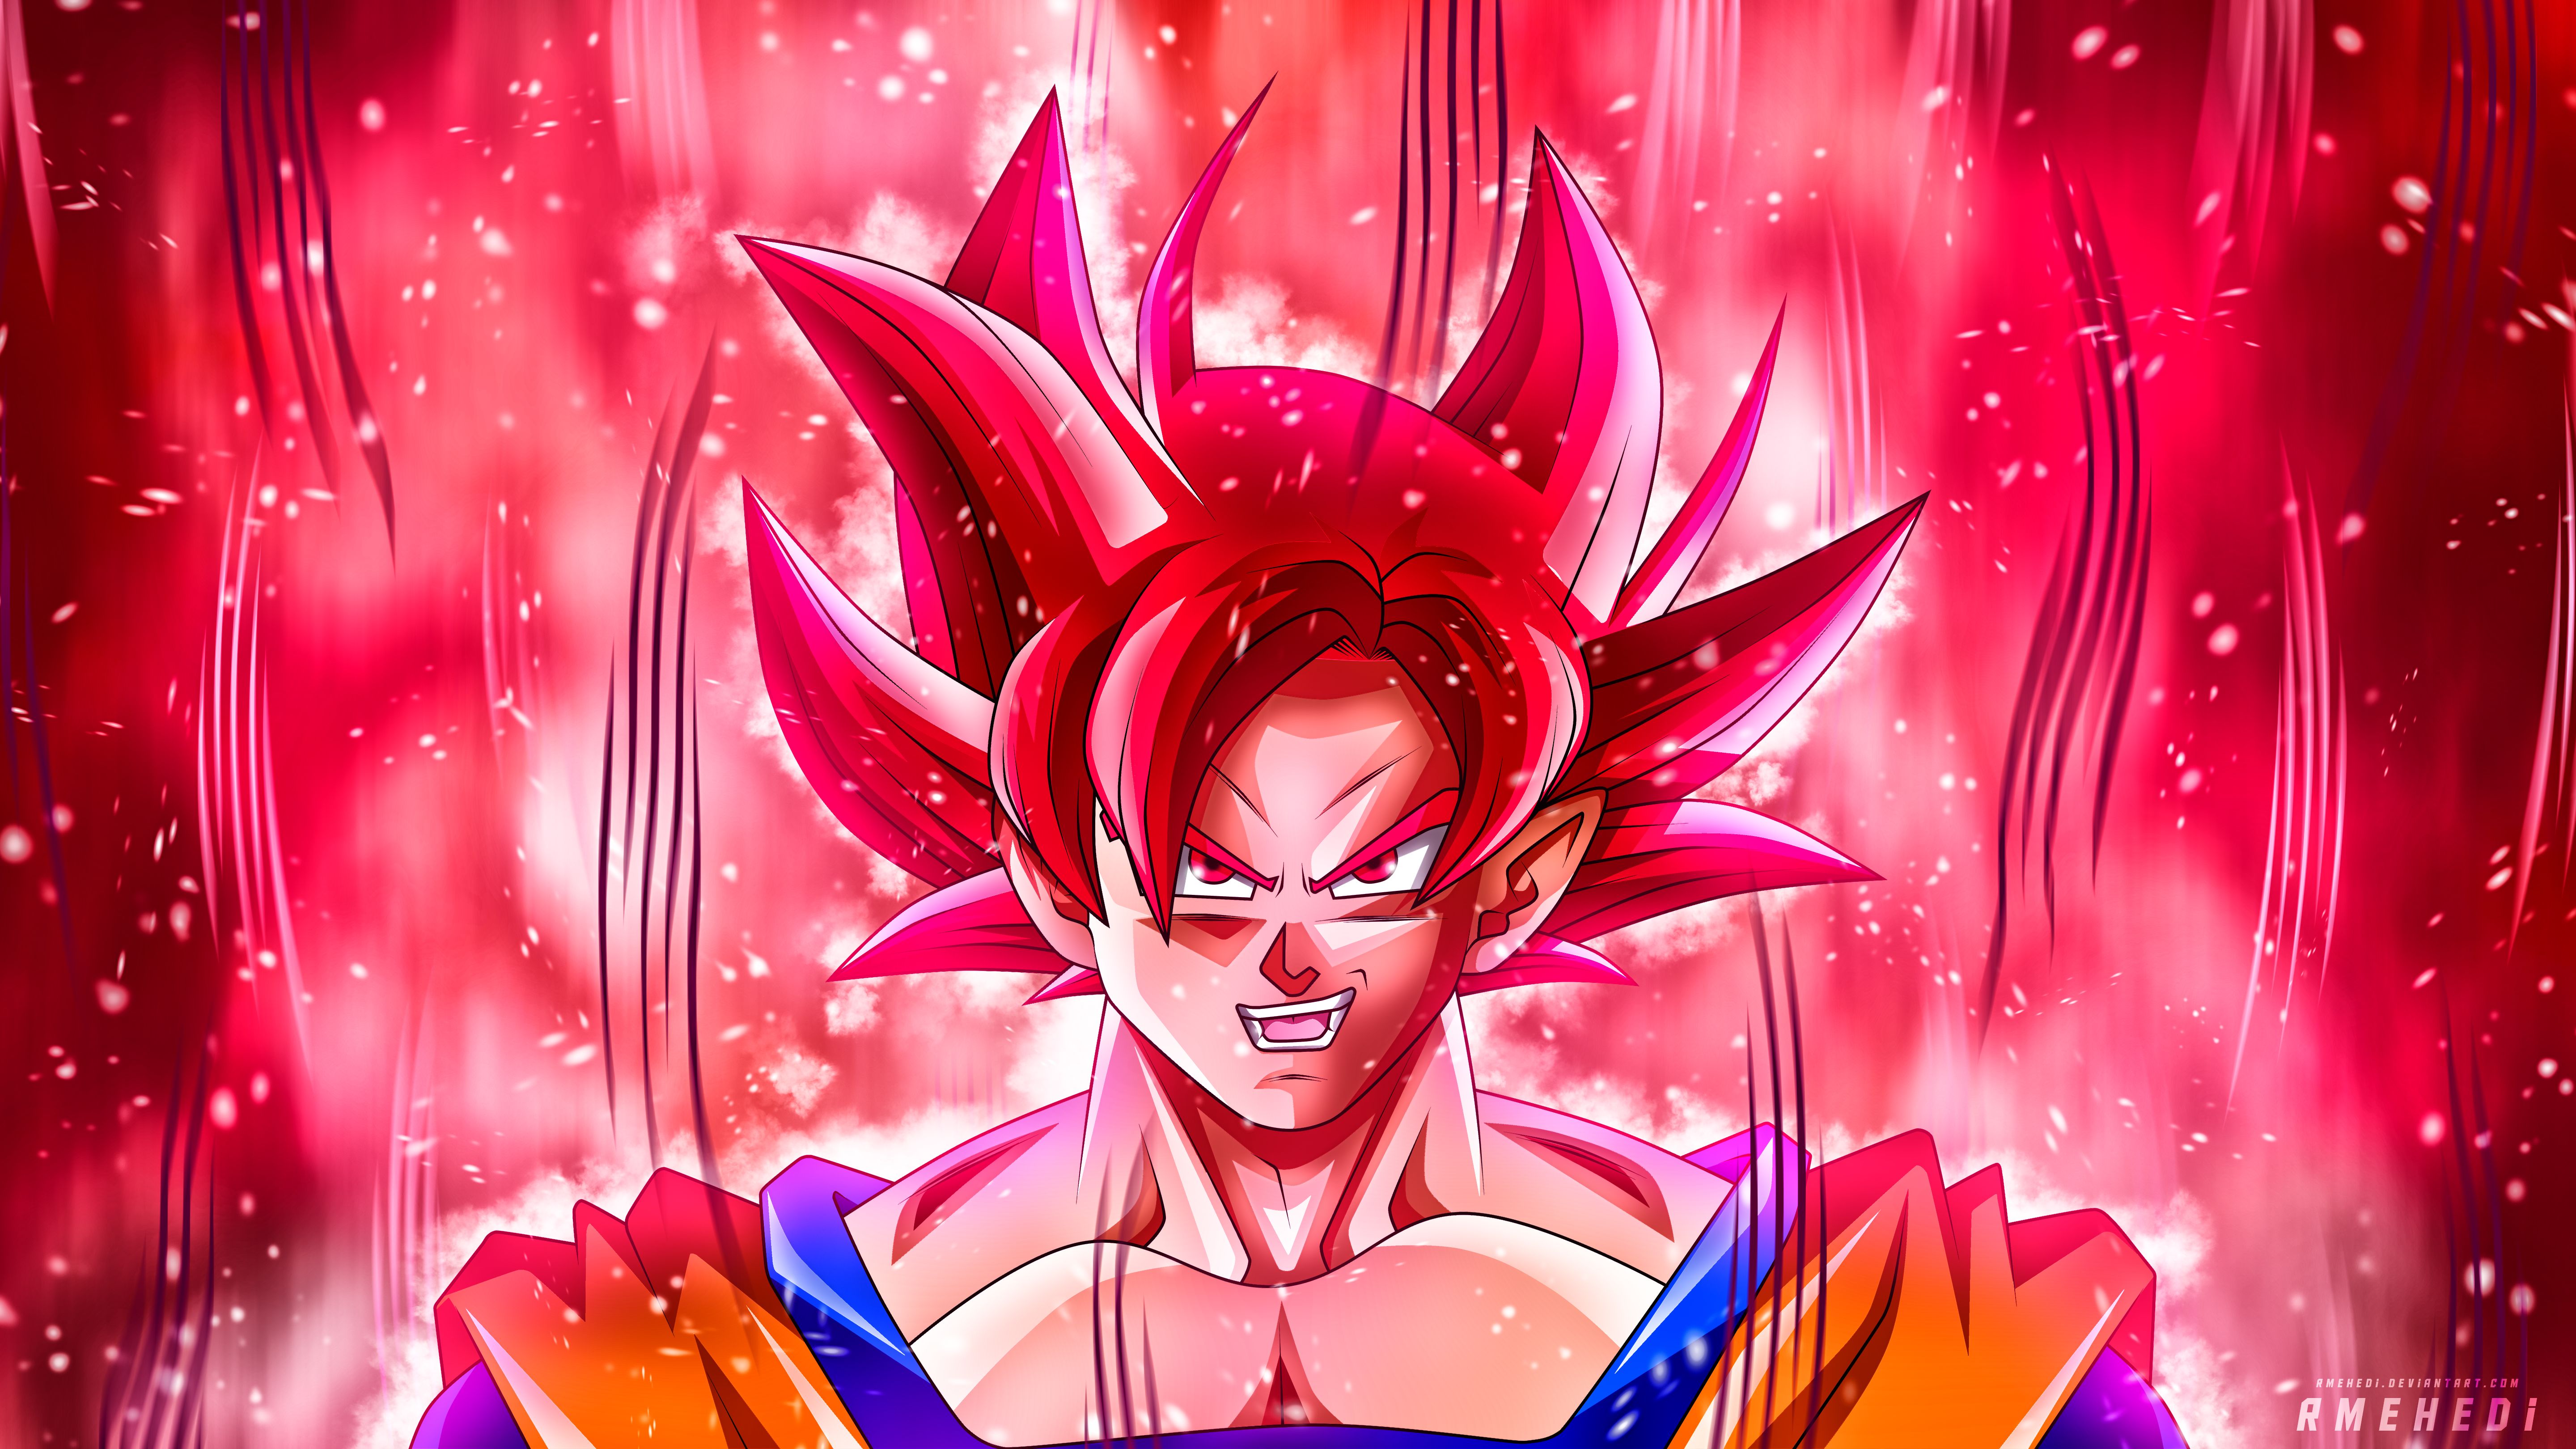  Goku HQ Background Images